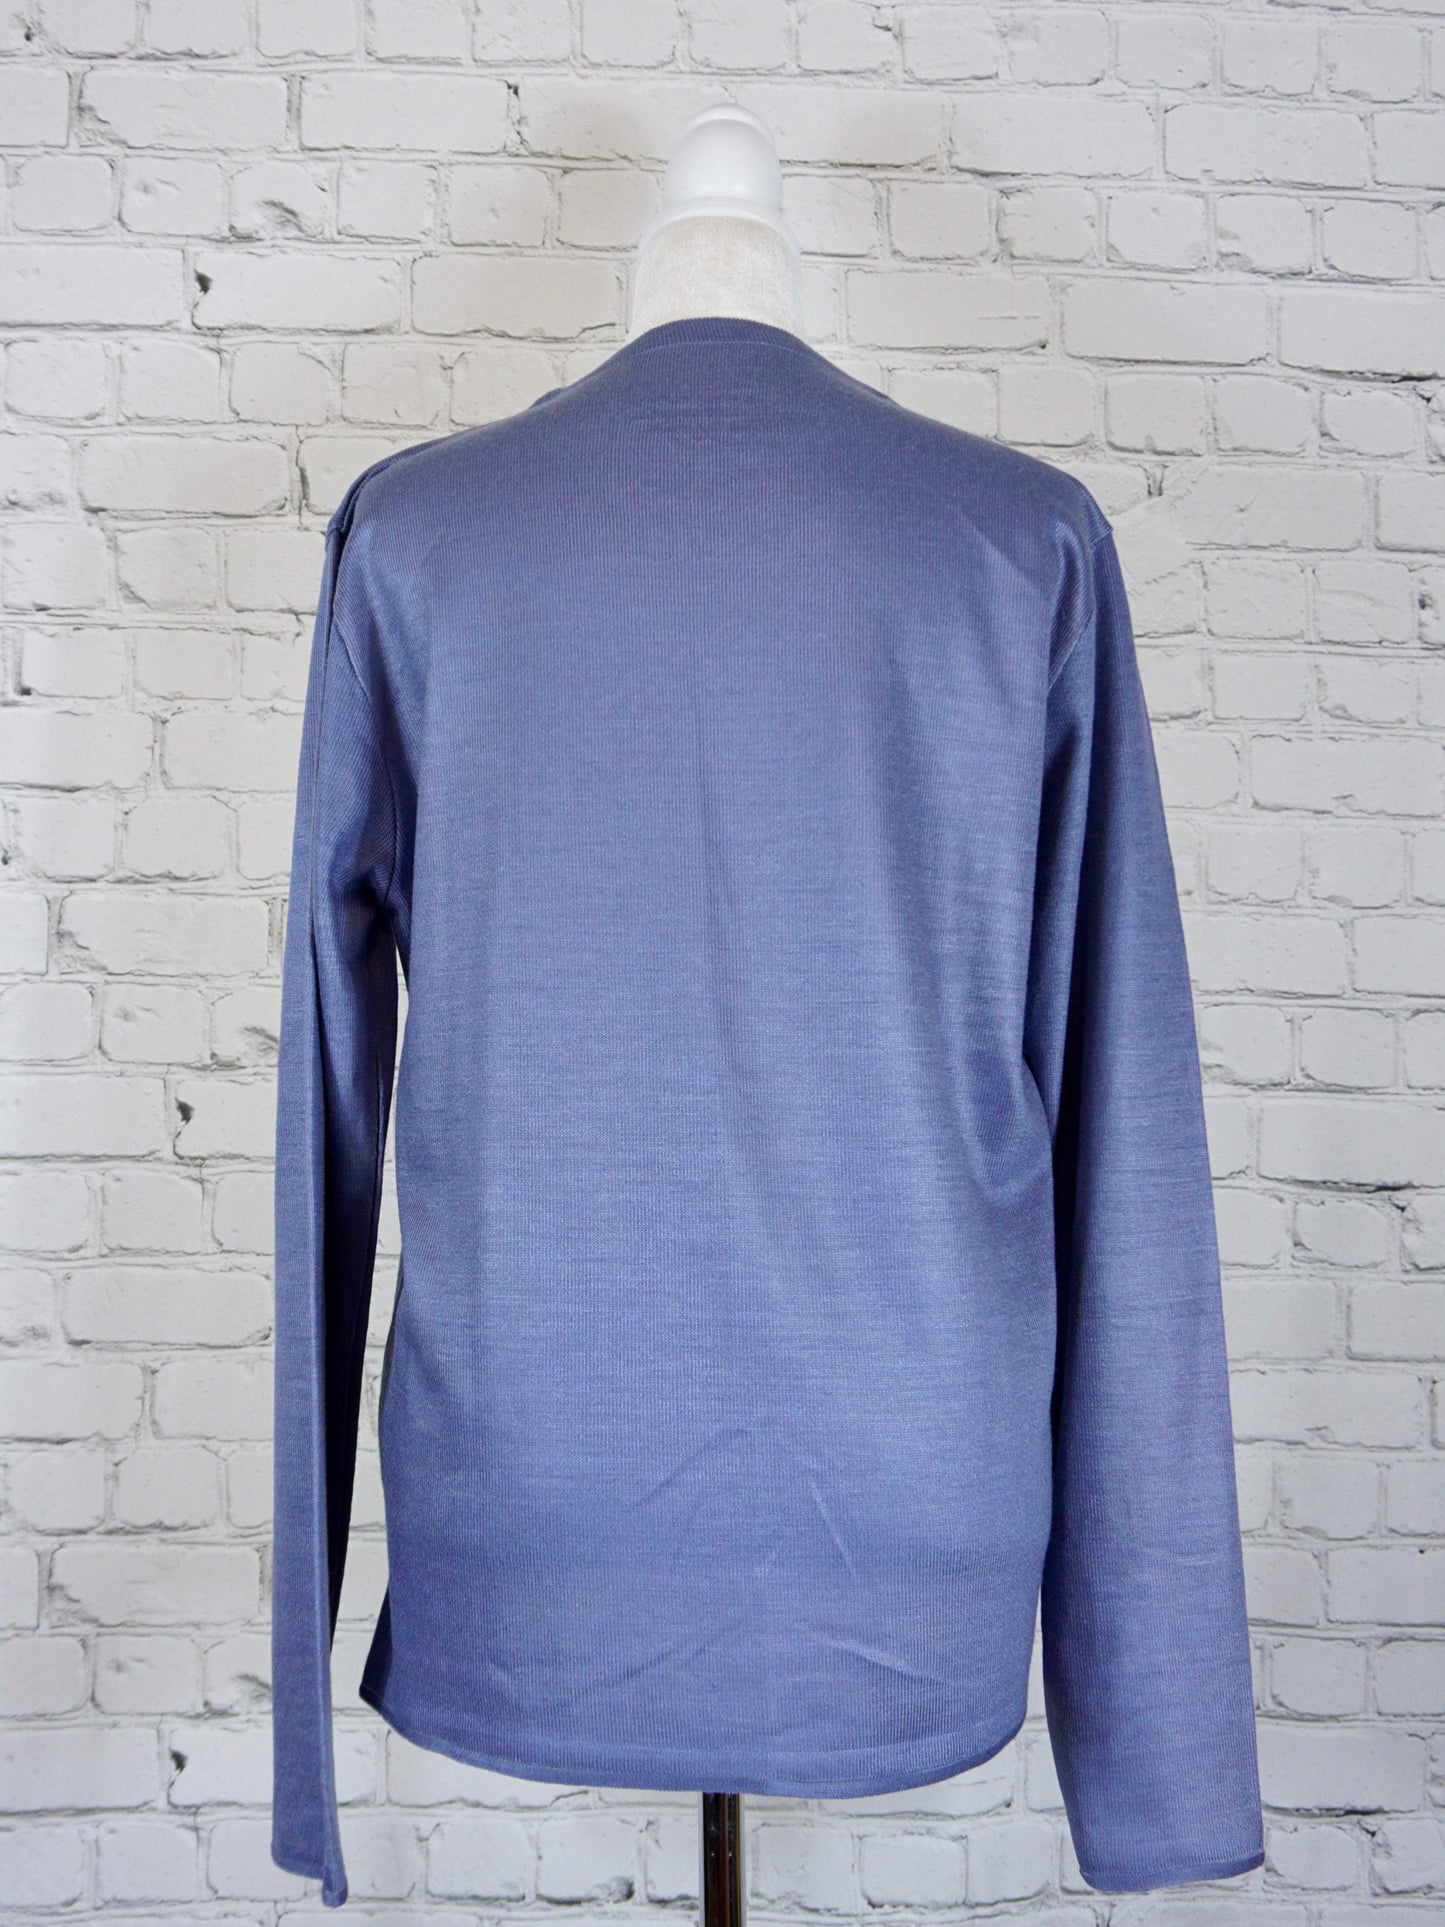 Ronner Design Blue Crewneck Sweater with Floral Horse Design - XL